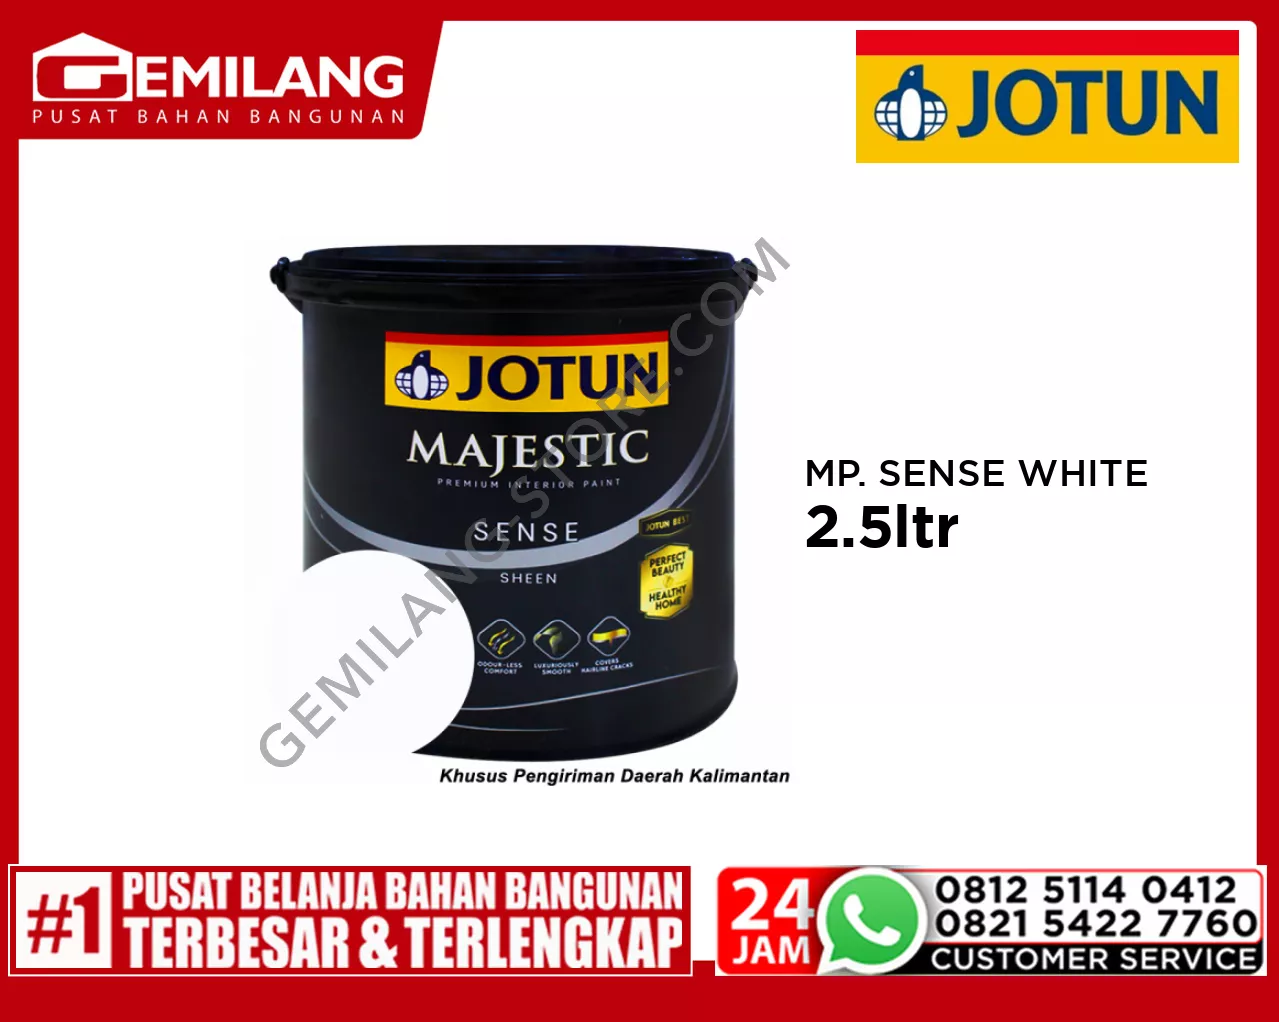 JOTUN MAJESTIC PERFECT SENSE WHITE 2.5ltr